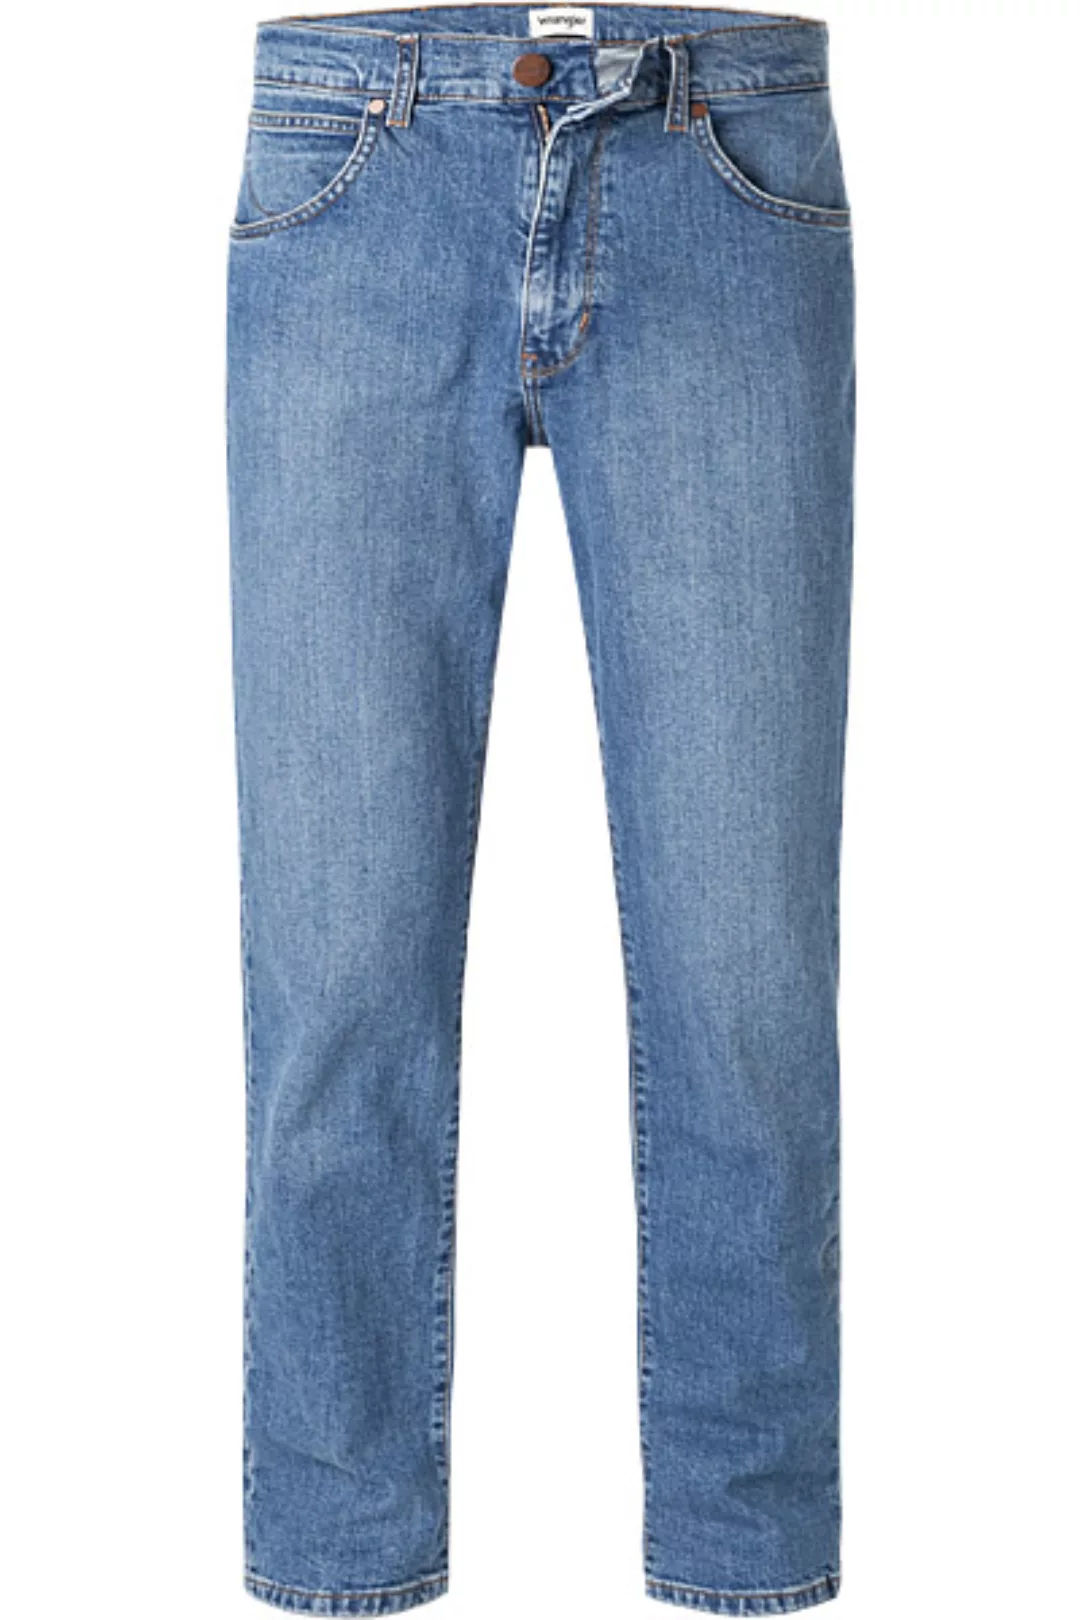 Wrangler Jeans Arizona fuse blue W12OM440D günstig online kaufen